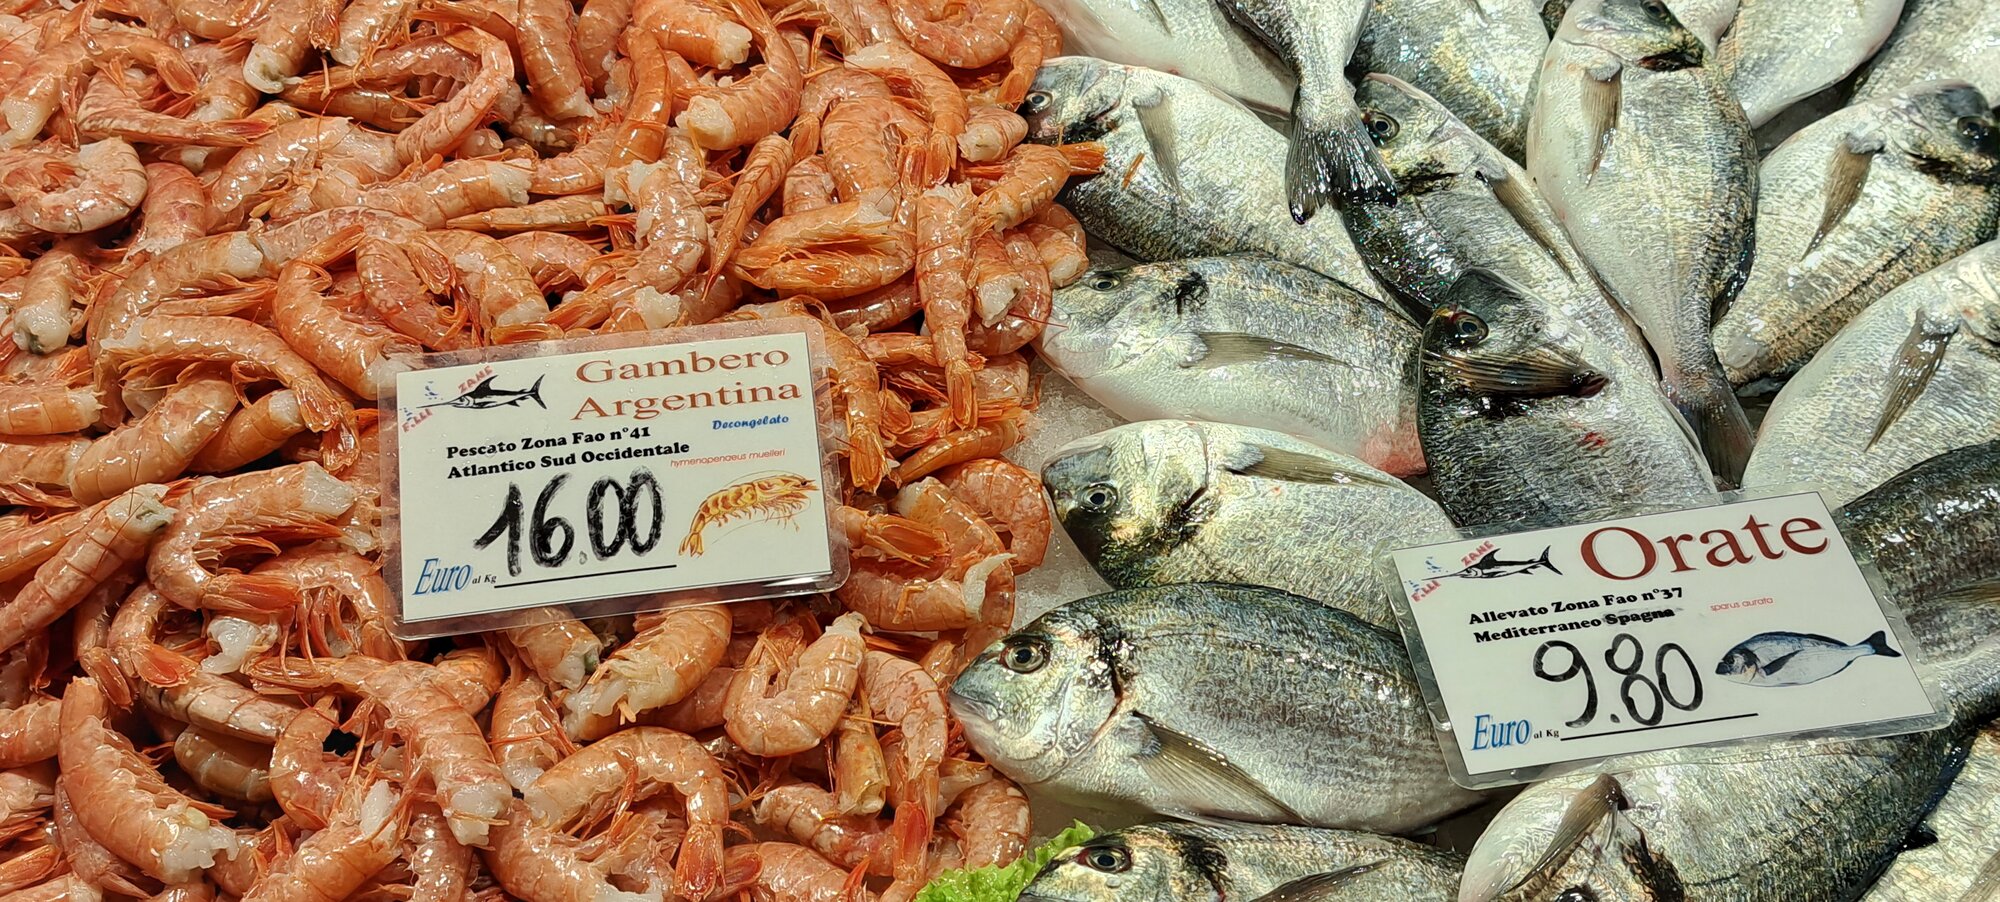 Rialto Fischmarkt